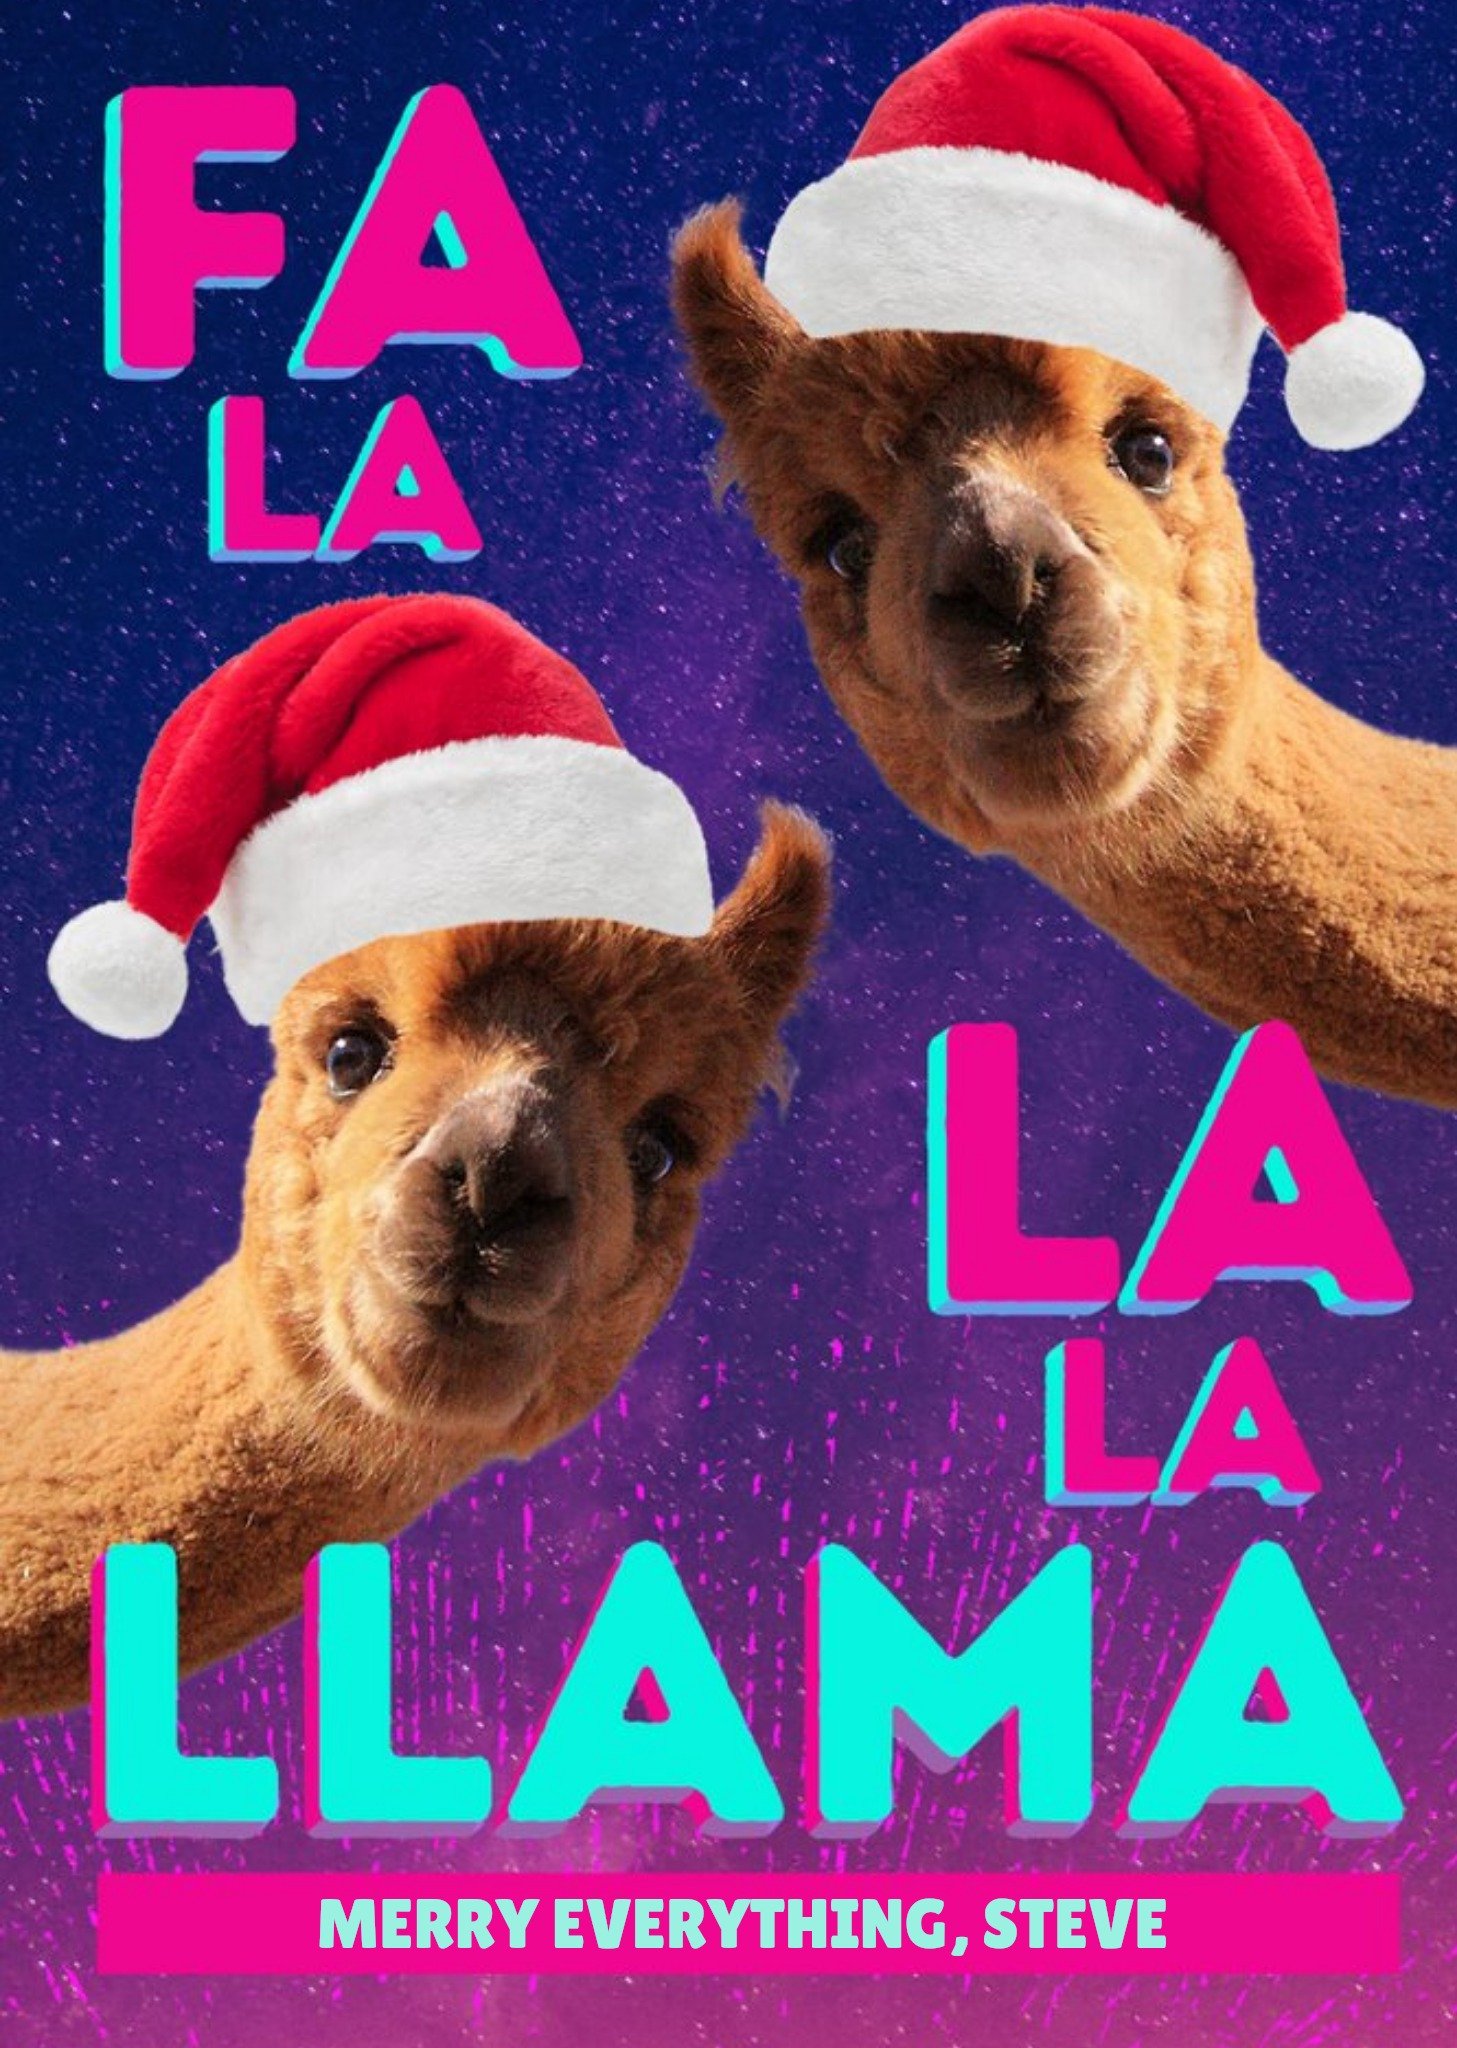 Moonpig Funny Fa La La La Llama Merry Everything Christmas Card Ecard